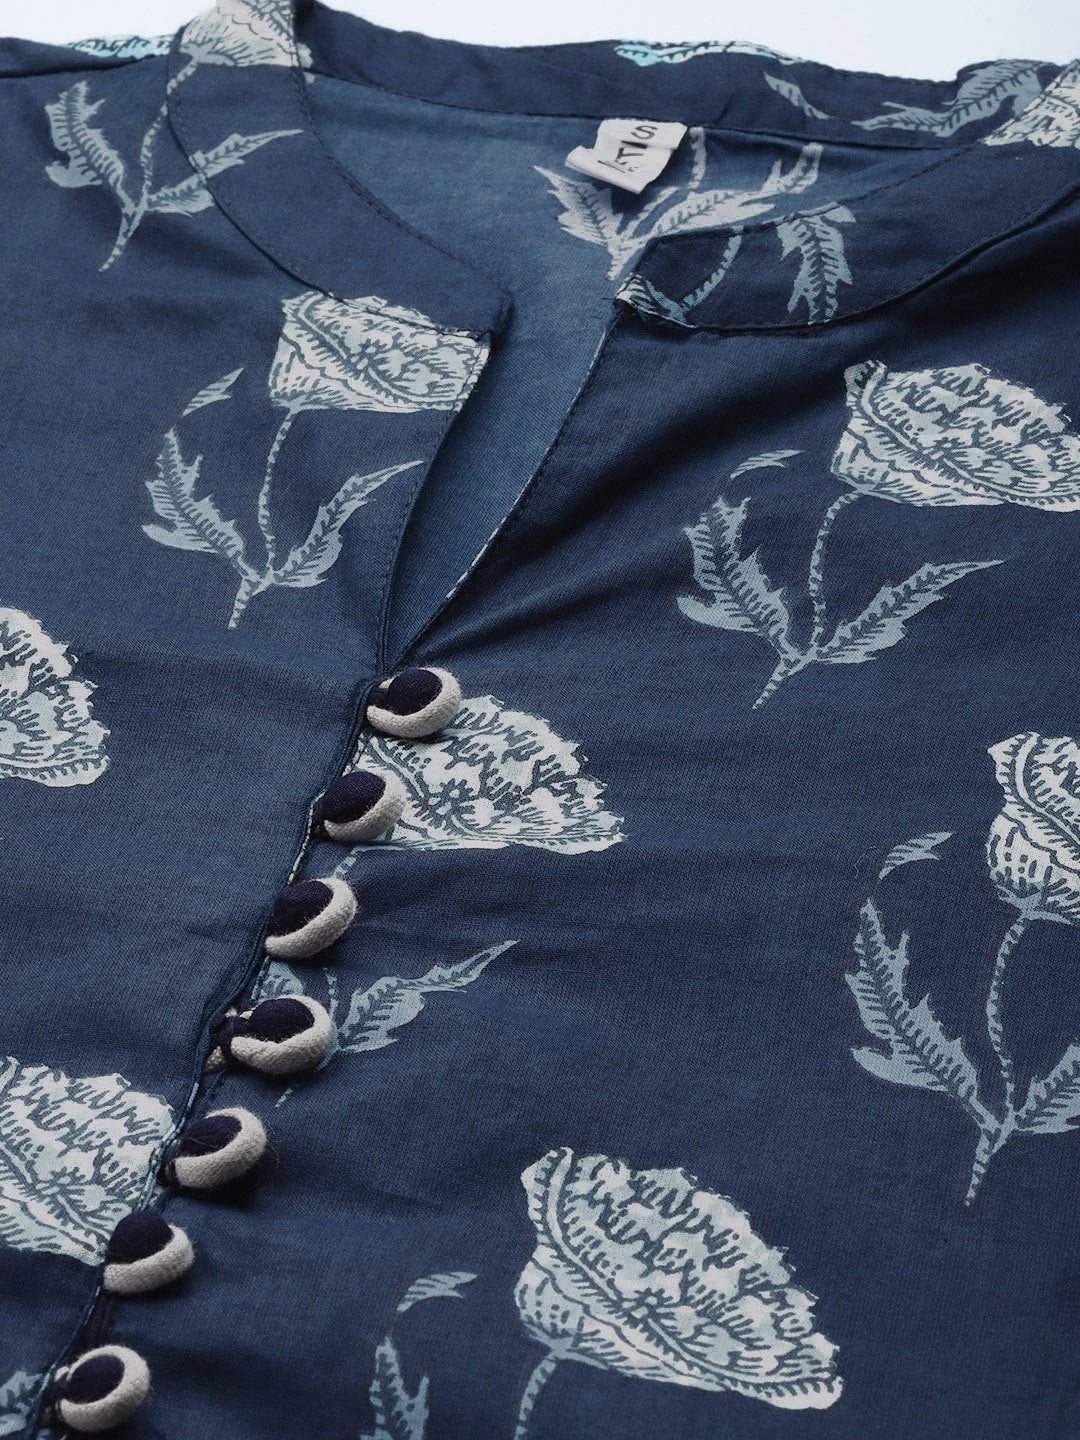 Women's Navy Blue & Offwhite Printed Tunic - Yufta